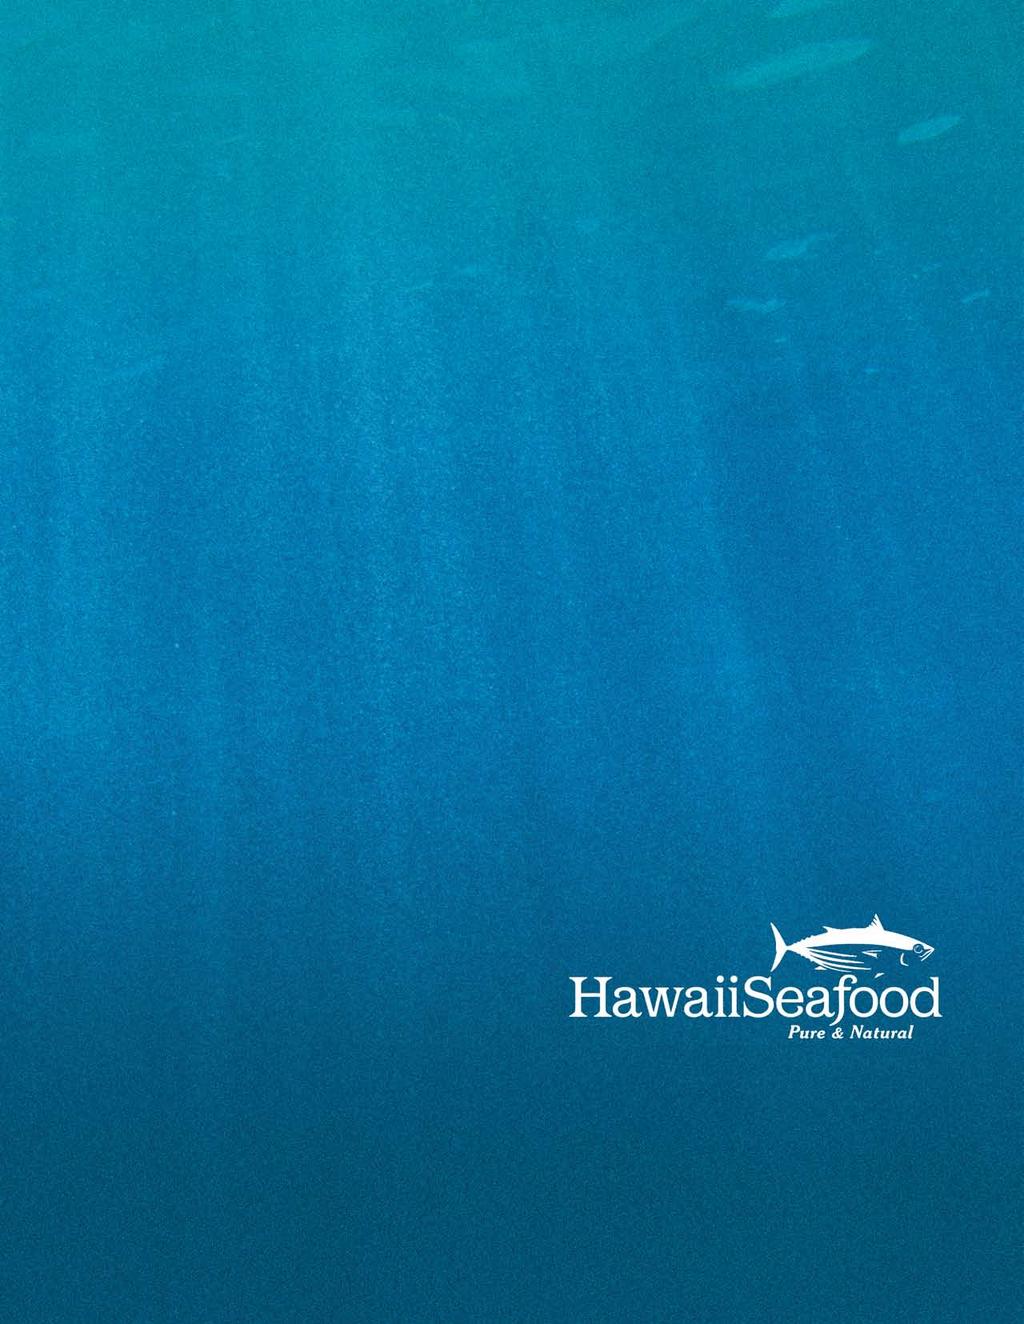 This document was prepared by J. John Kaneko and Paul K. Bartram of PacMar Inc., Honolulu, Hawaii under the Hawaii Seafood Project, August 29, 2009.